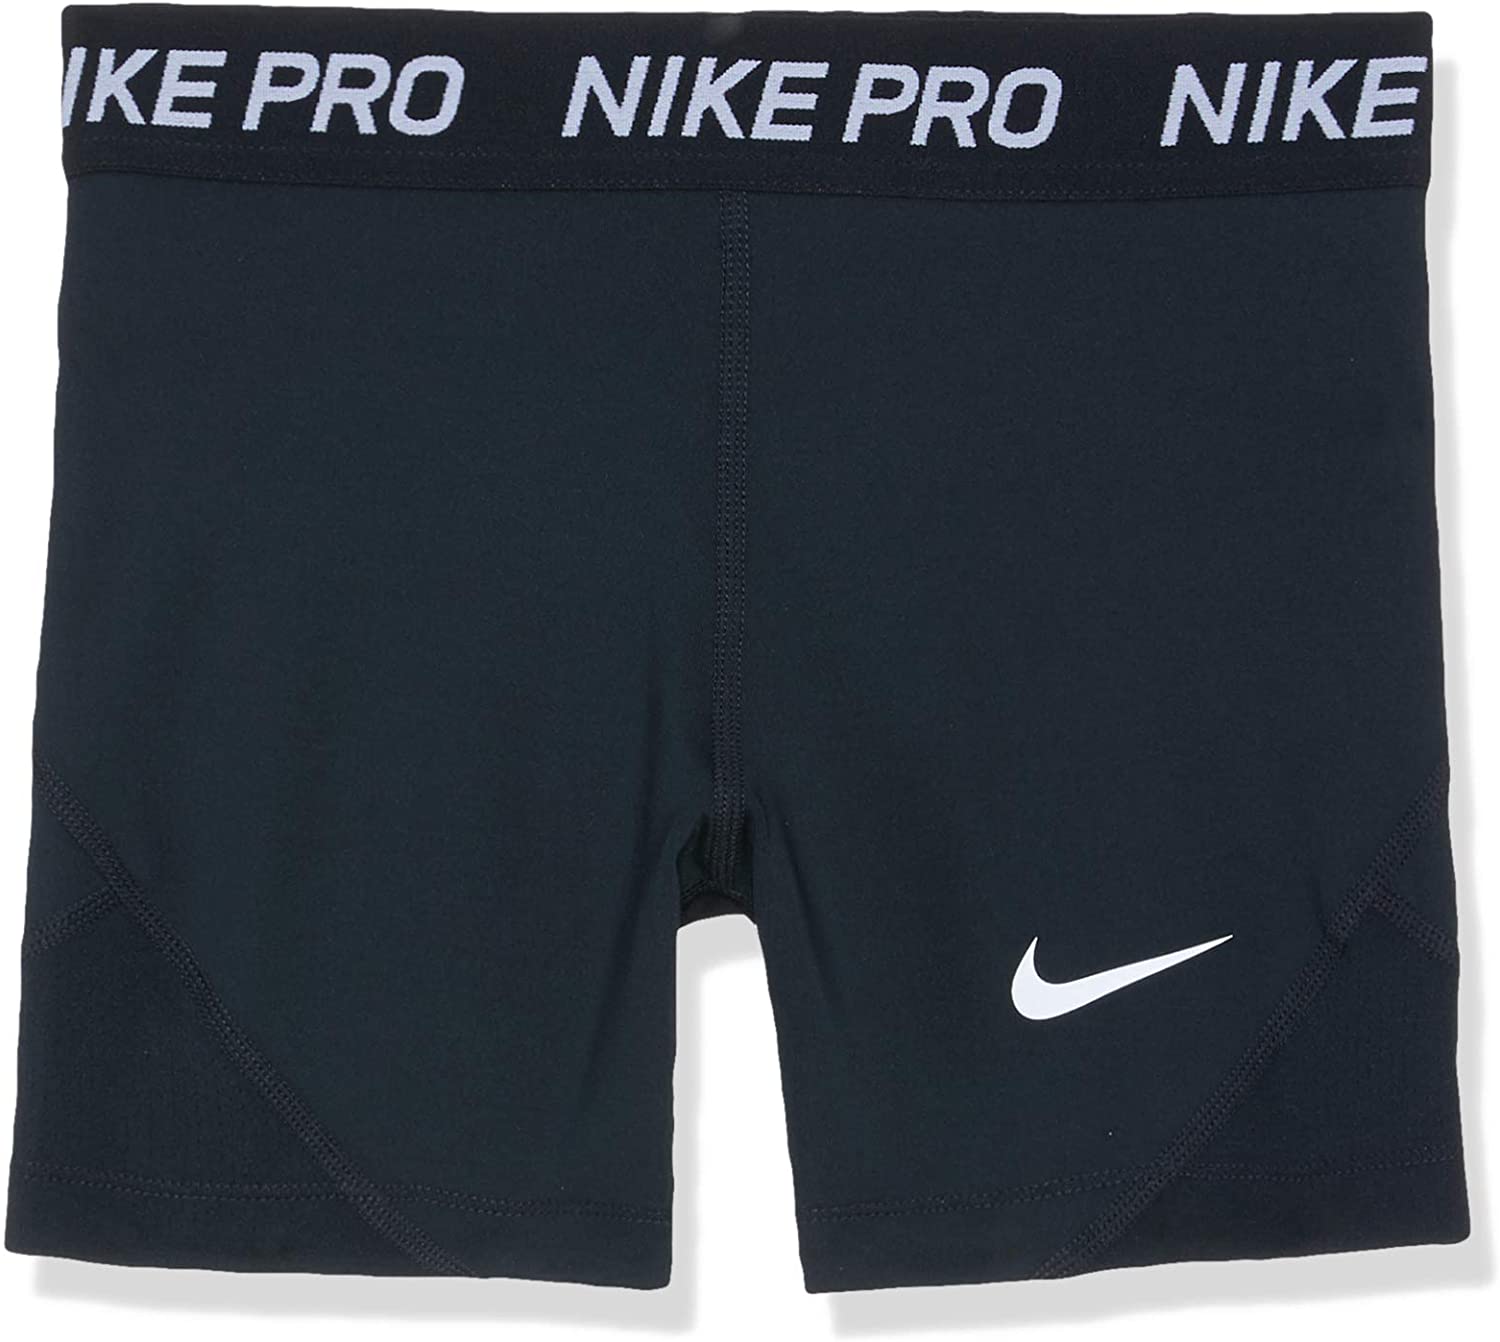 Nike Pro WholeSale - Price List, Bulk Buy at